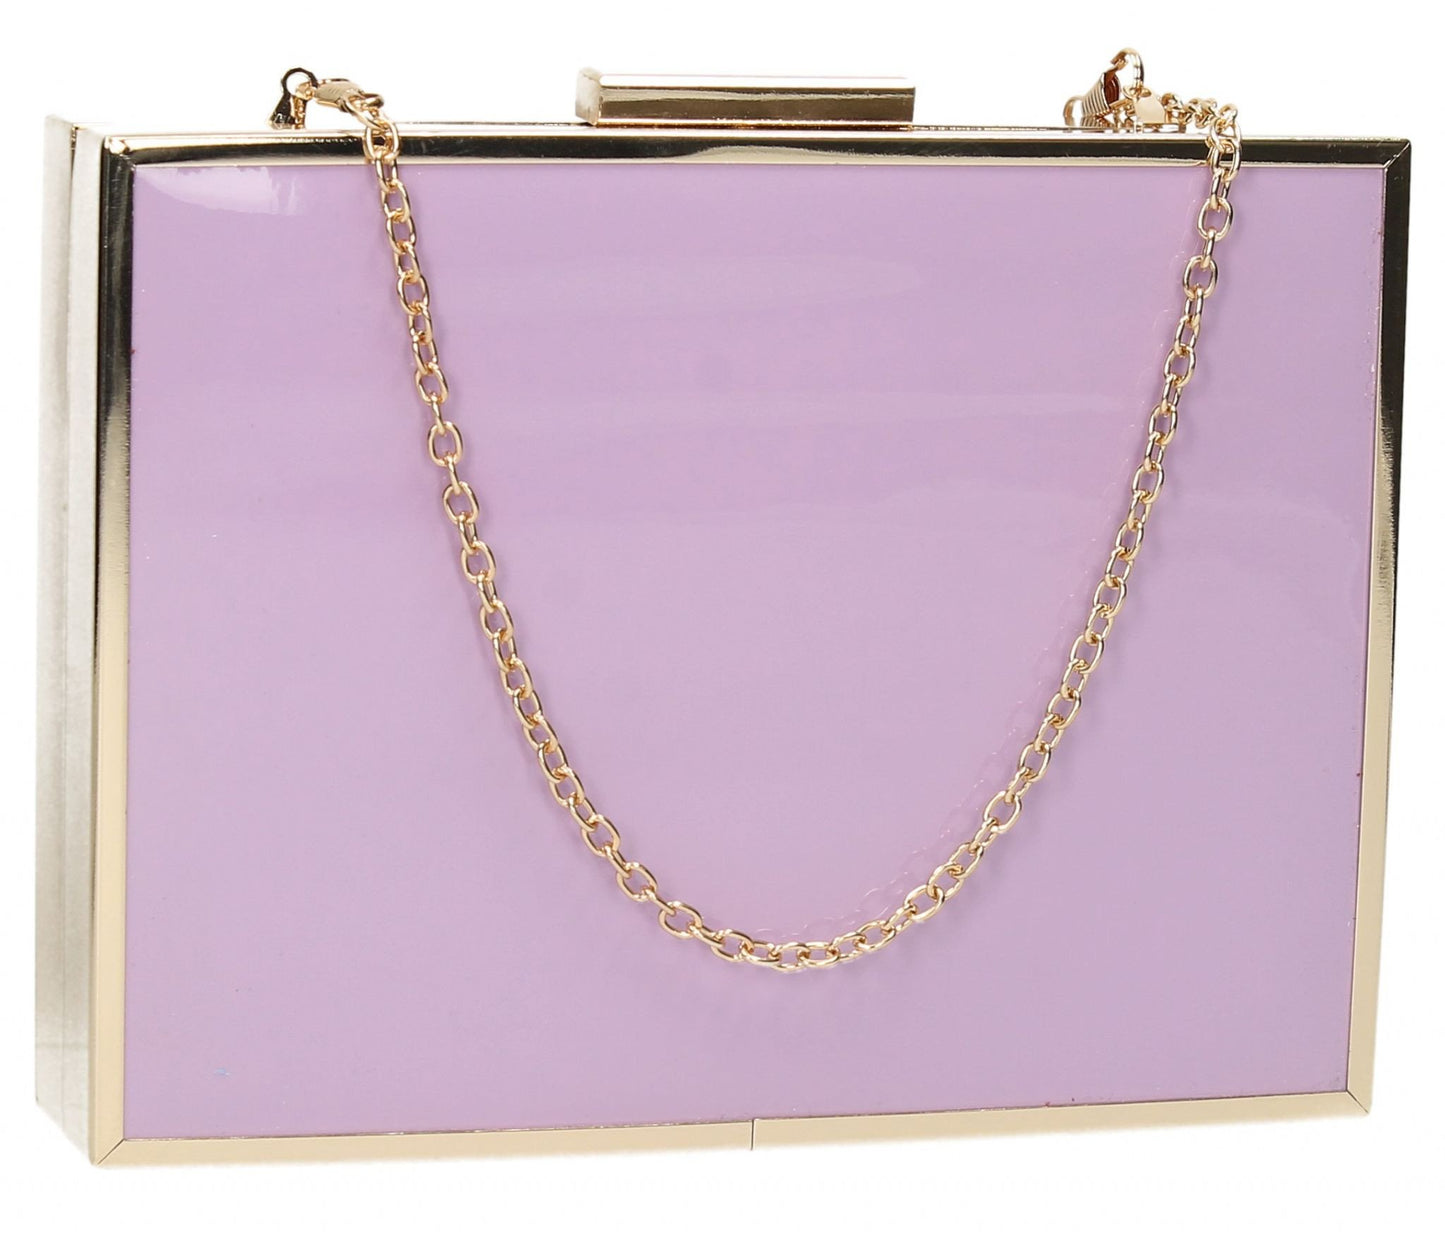 SWANKYSWANS Kate Box Clutch Bag Lilac Cute Cheap Clutch Bag For Weddings School and Work